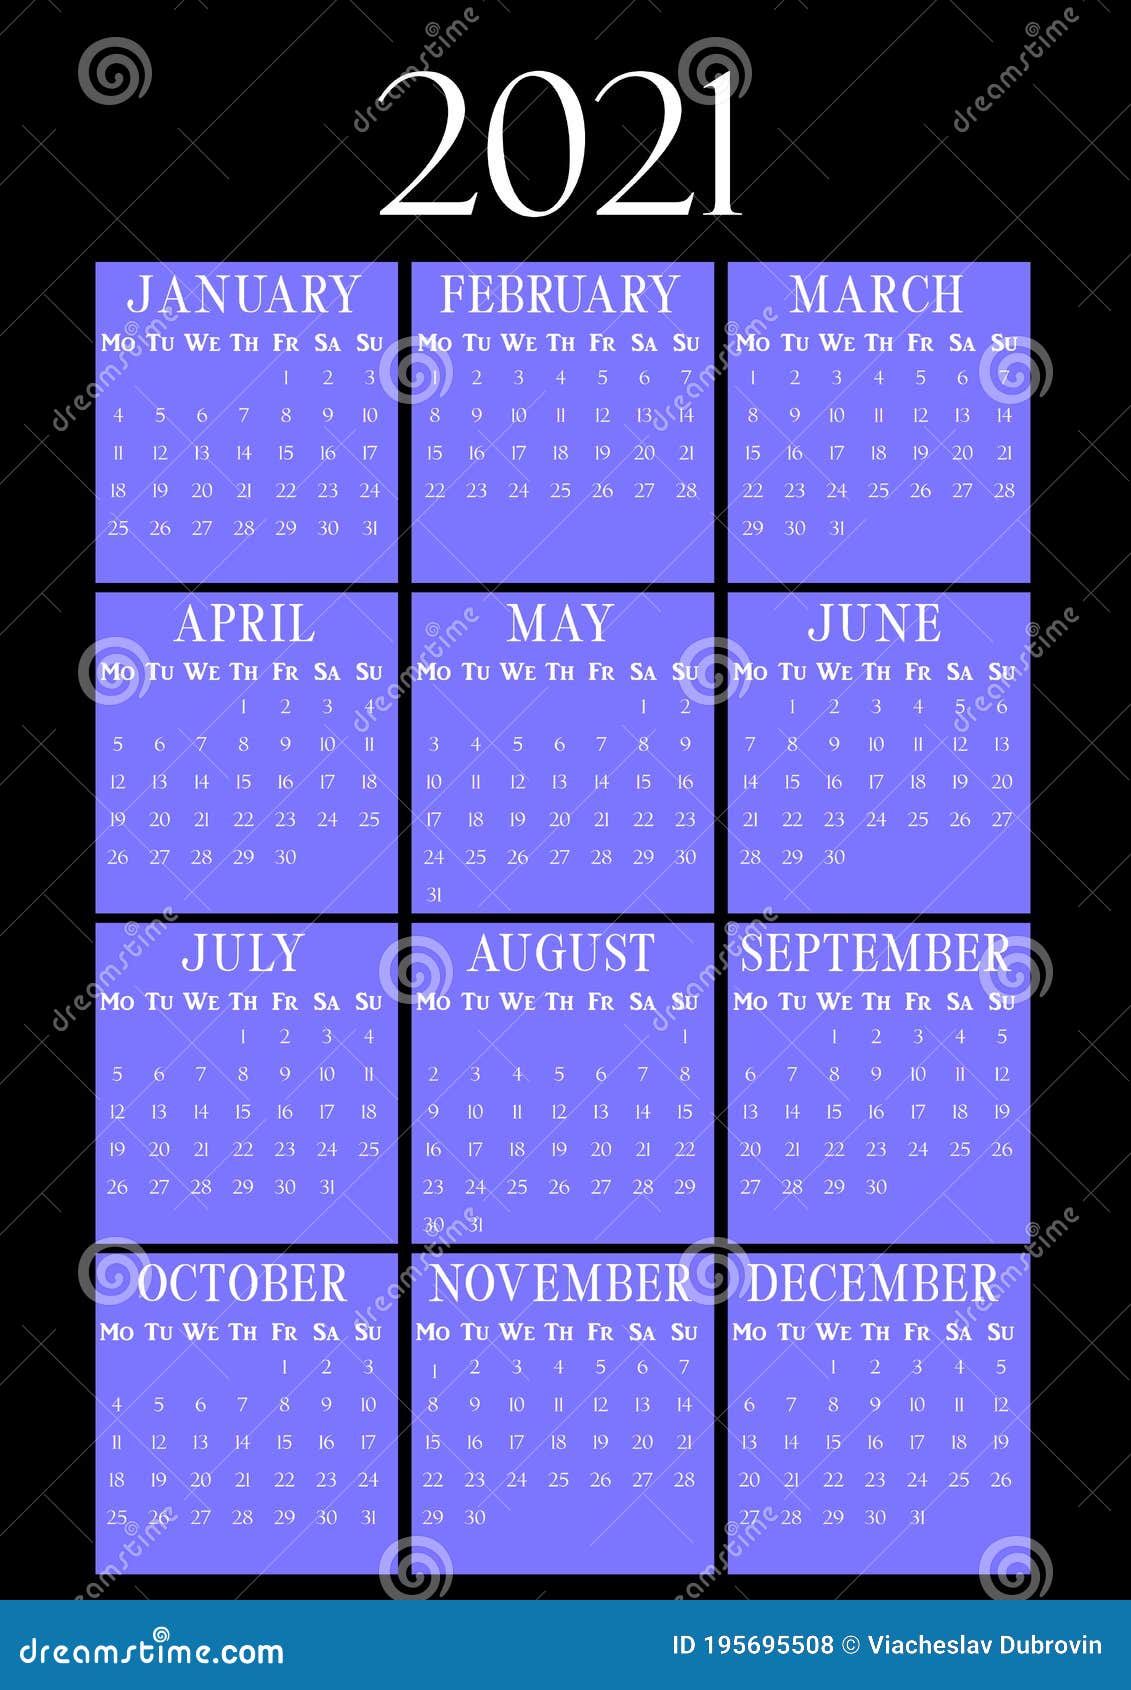 Diploma Ramkoers Oogverblindend 2021 Year Vertical Calendar on A4 Paper Format. Black and Blue Wall Calendar  Stock Illustration - Illustration of october, planning: 195695508